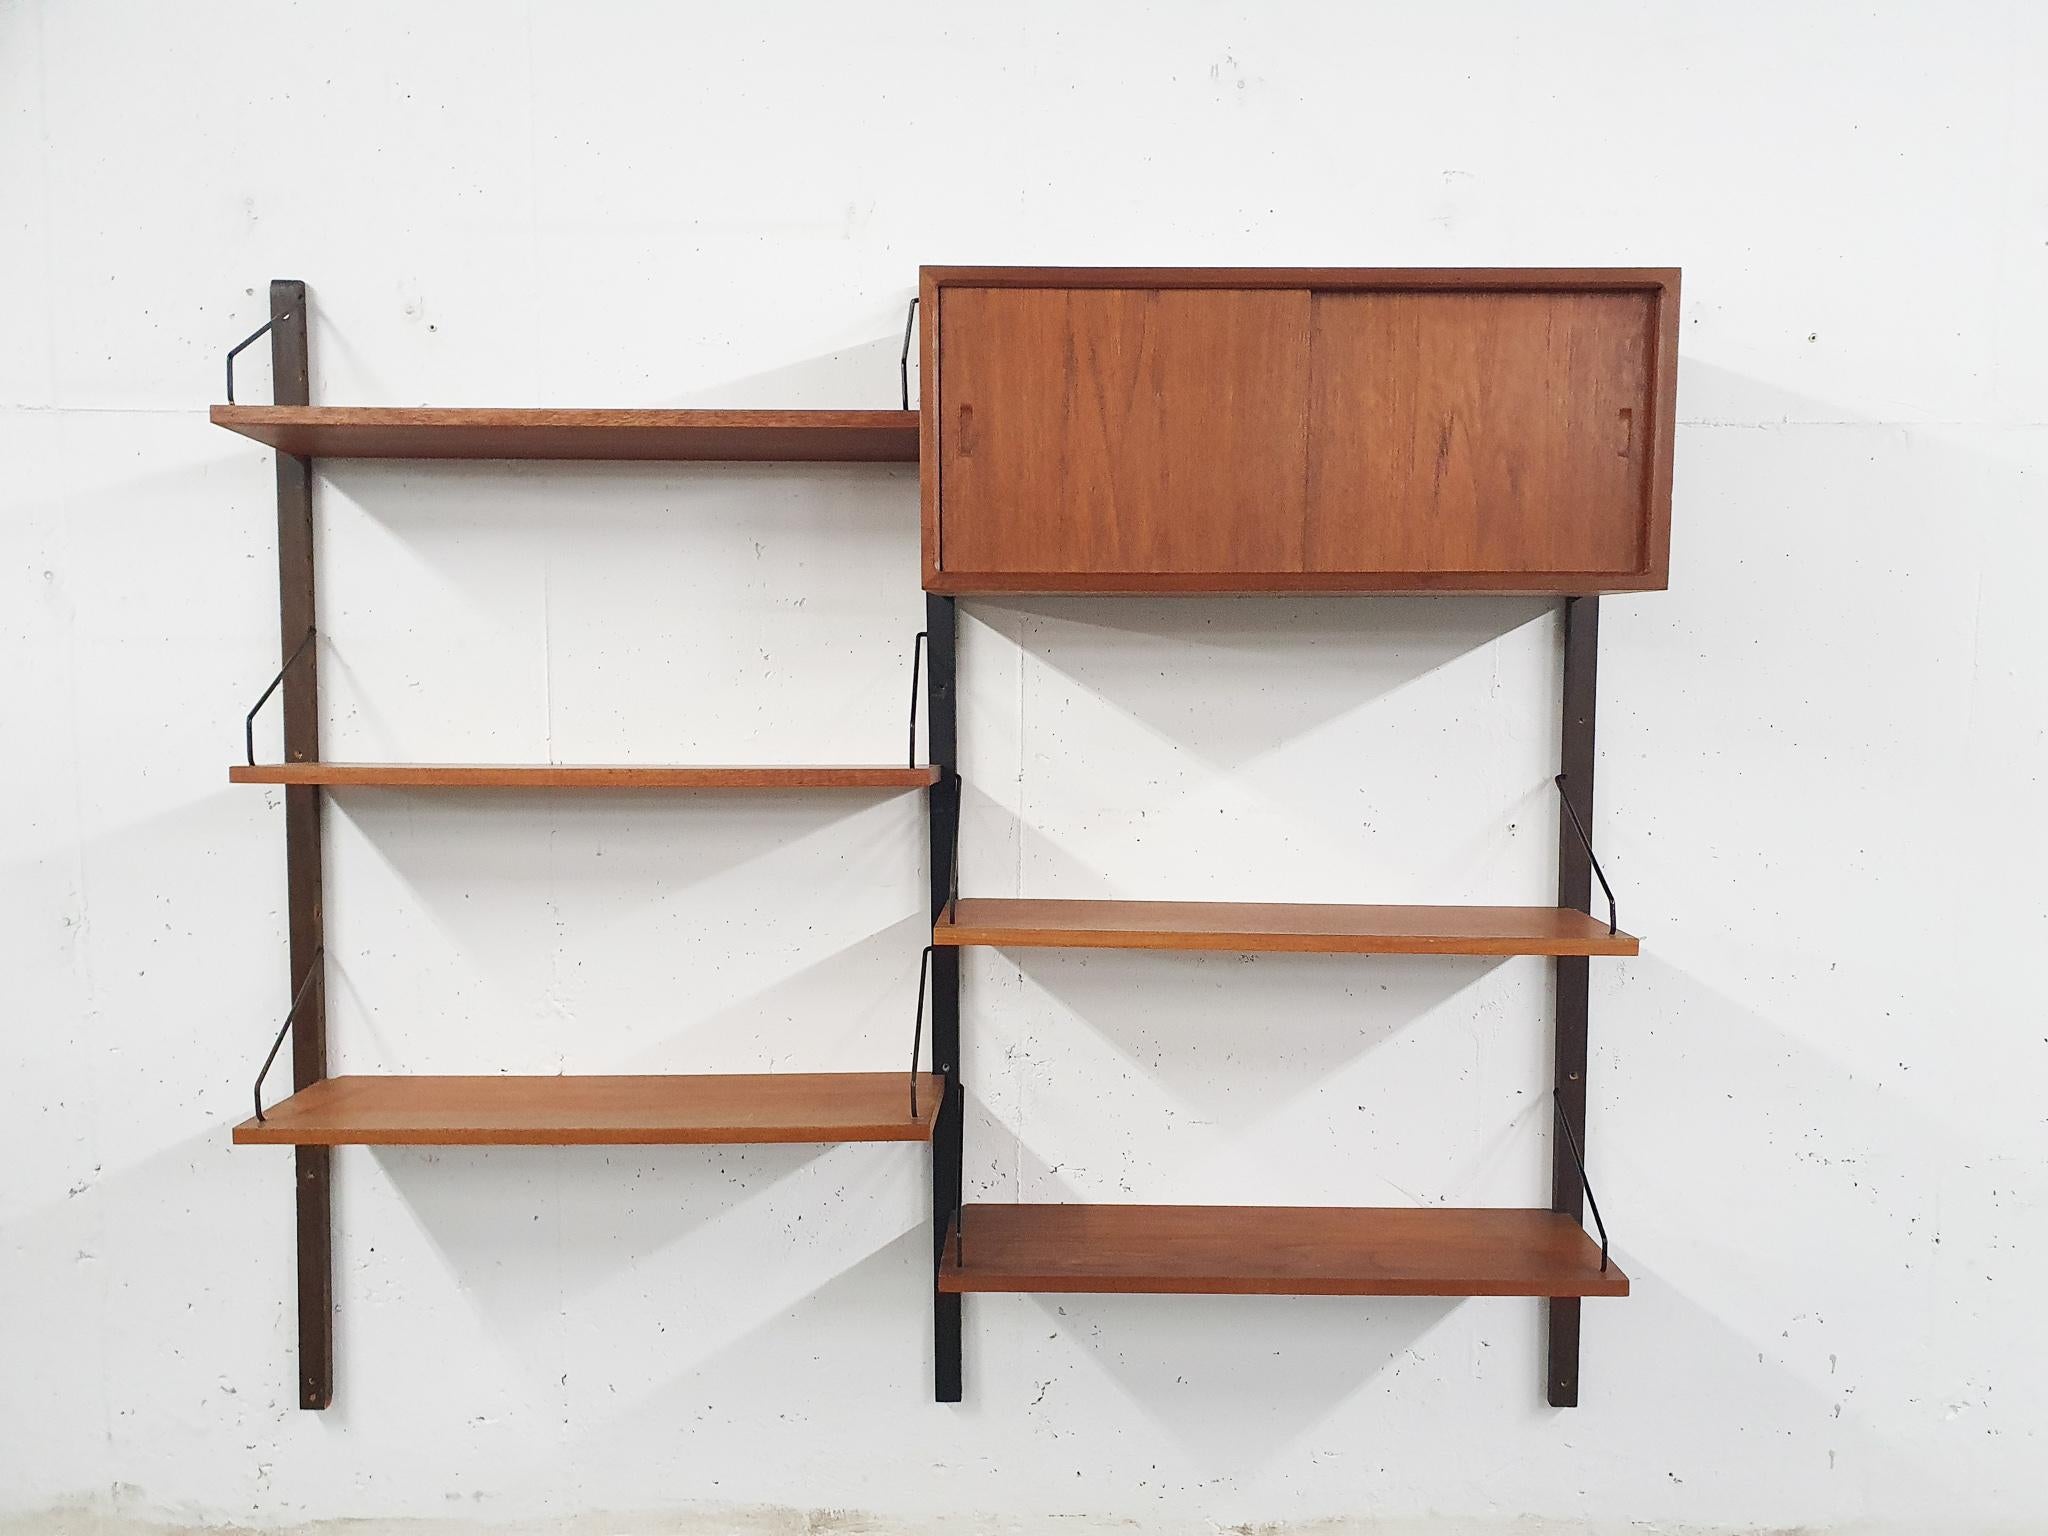 Black wooden risers and teak veneer book shelves and cabinet with black metal hooks.
This wall unit consist of:
3 x shelf: 80 x 20 cm
2 x shelf: 80 x 24 cm
1 x cabinet: 80 x 30 x 33cm (L x D x H)
3 risers: 145 cm.